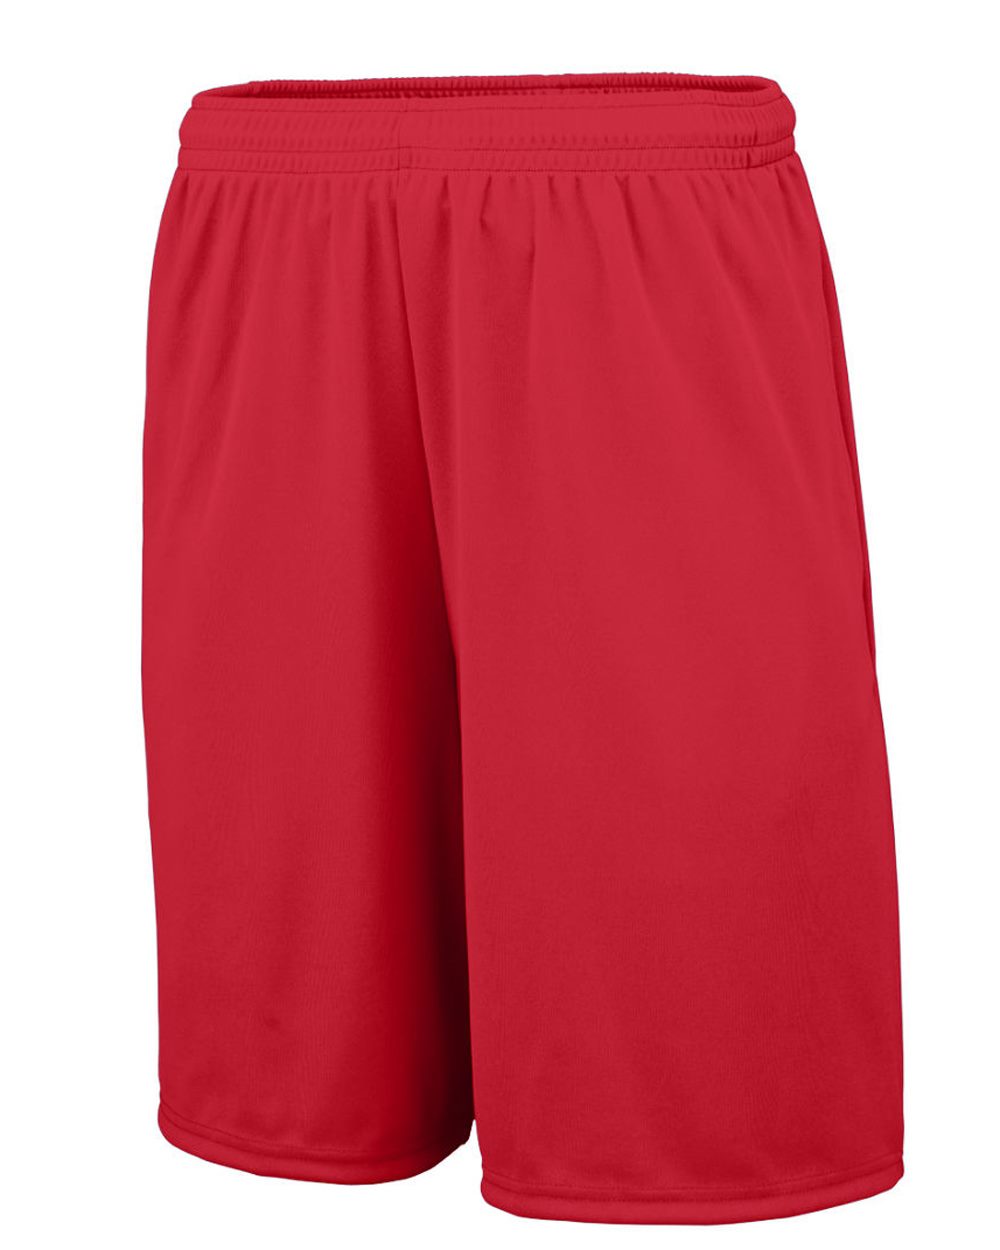 Augusta Sportswear 1429 - Youth Training Shorts with Pocket